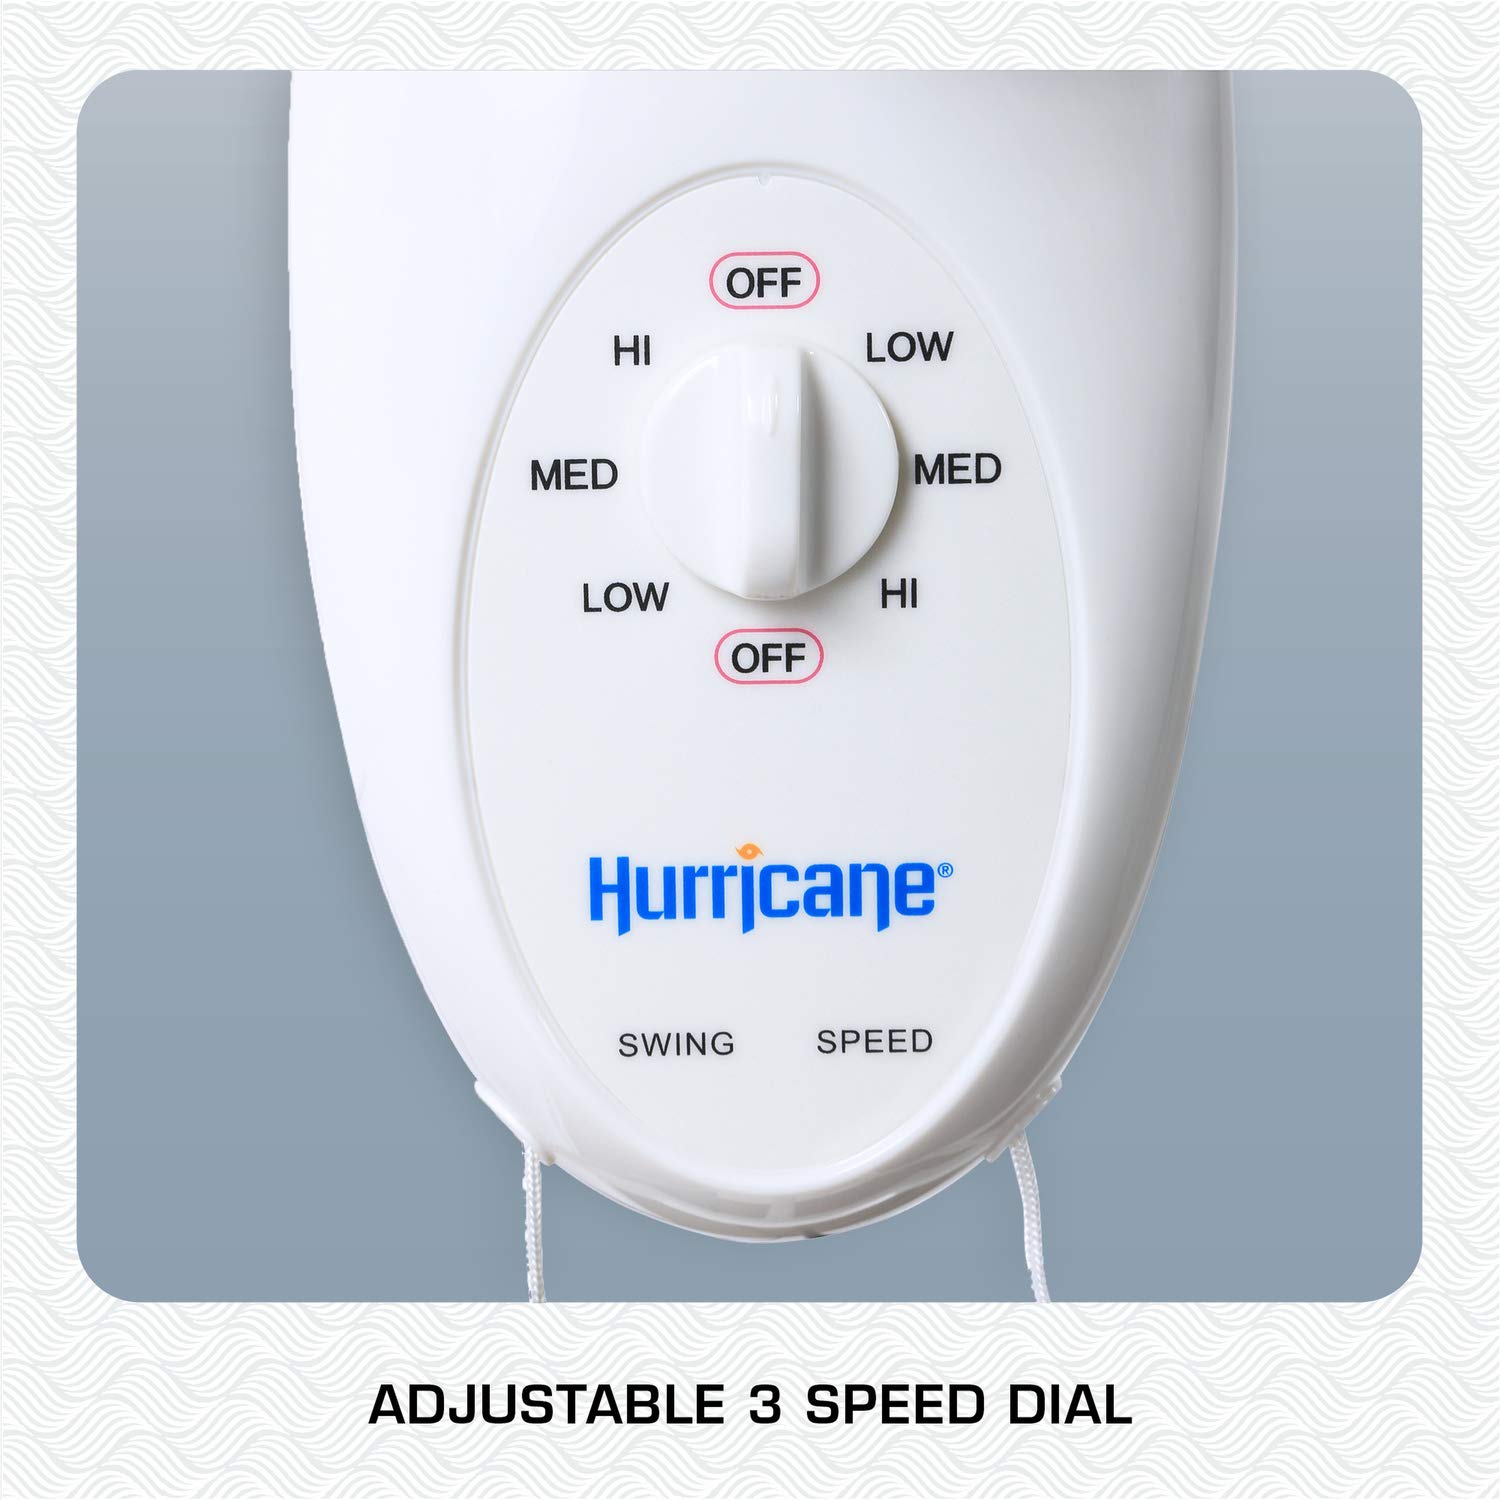 Hurricane® Supreme Oscillating Wall Mount Fan 16" - HGC736505